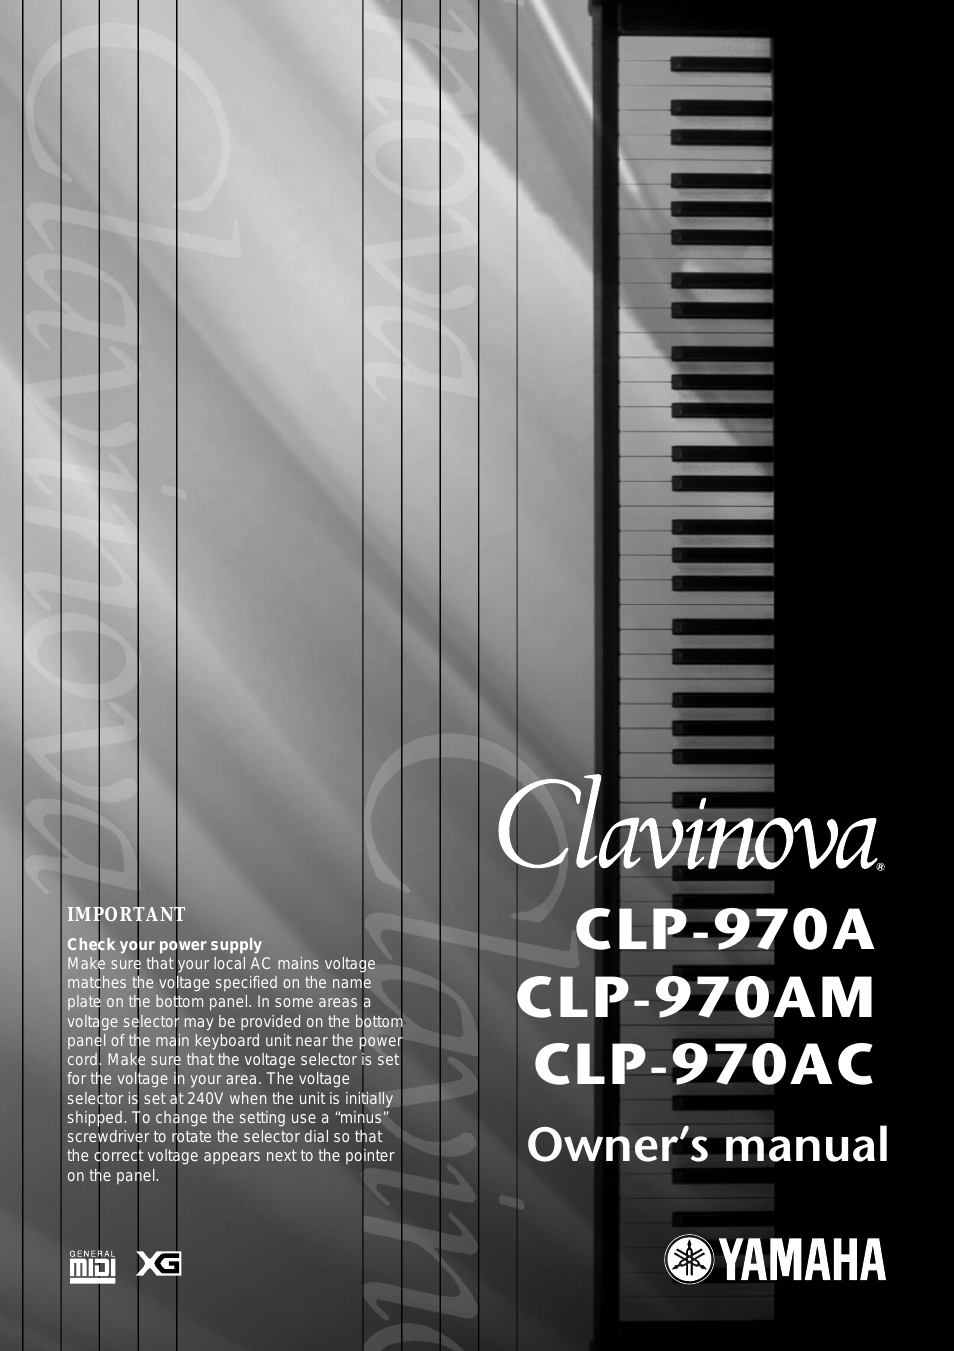 CLP-970AC